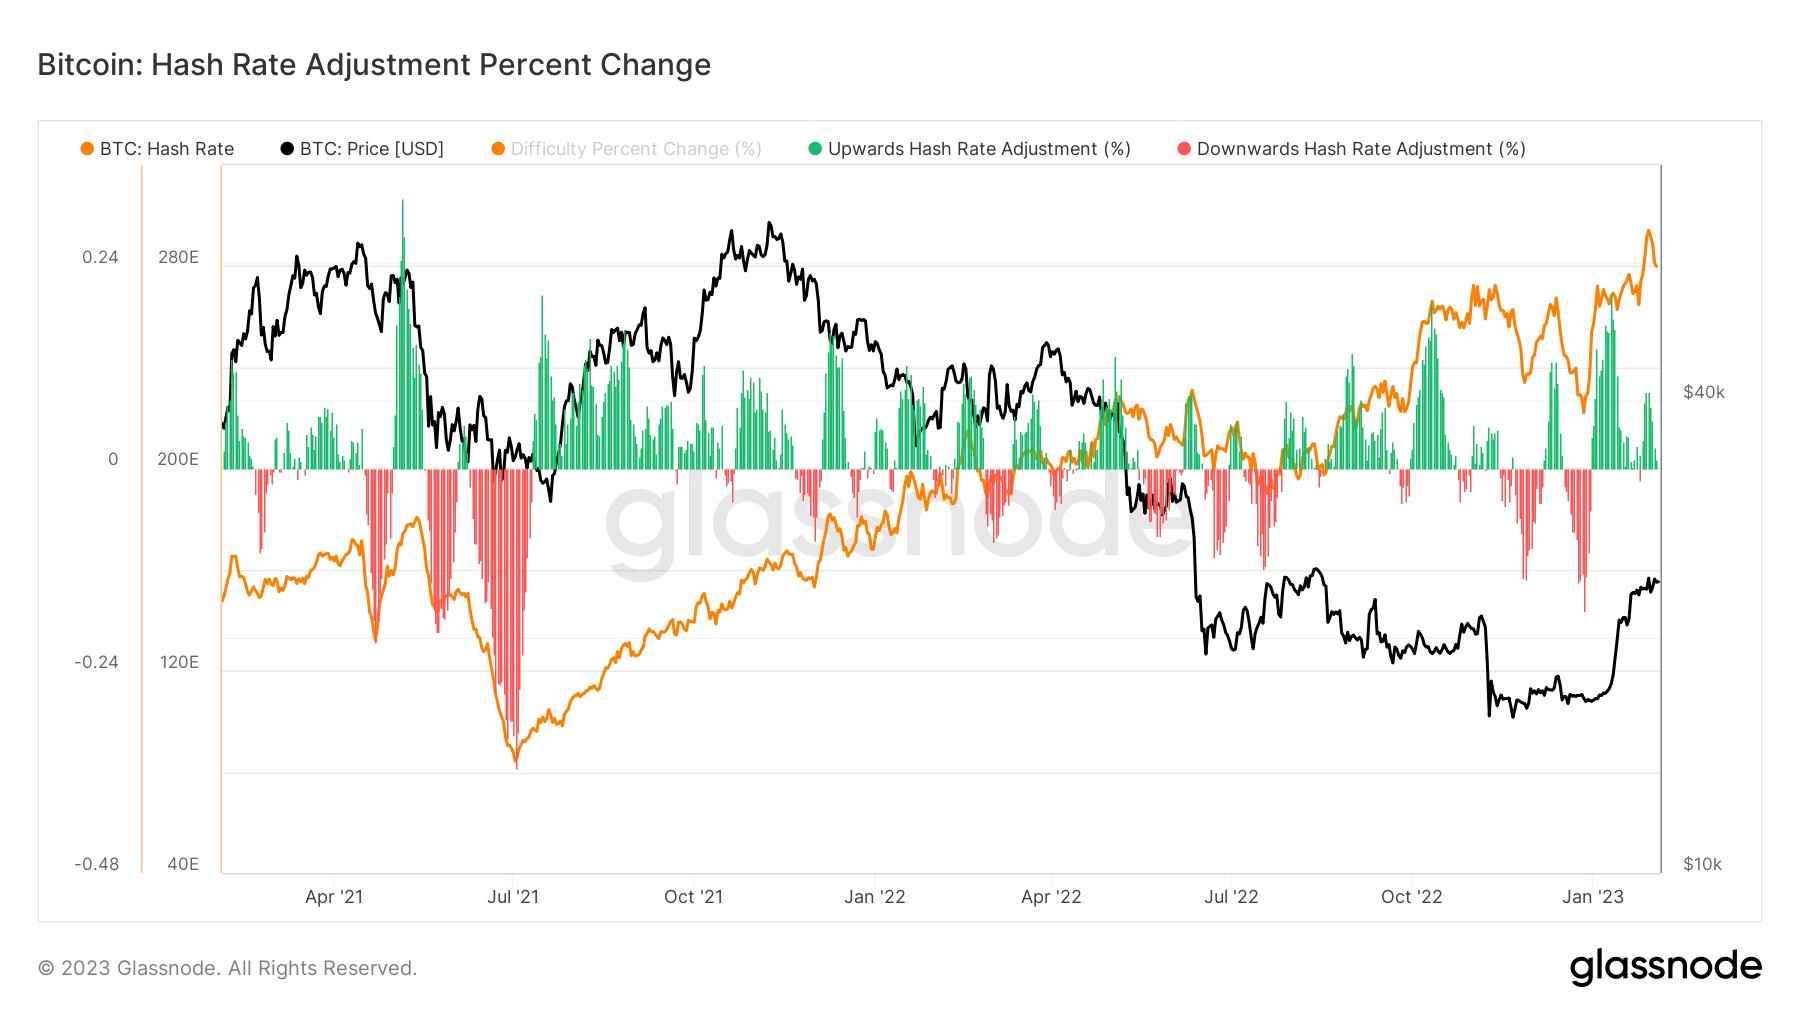 BTC Hash Rate Adjustment Percent Change (Source: Glassnode)